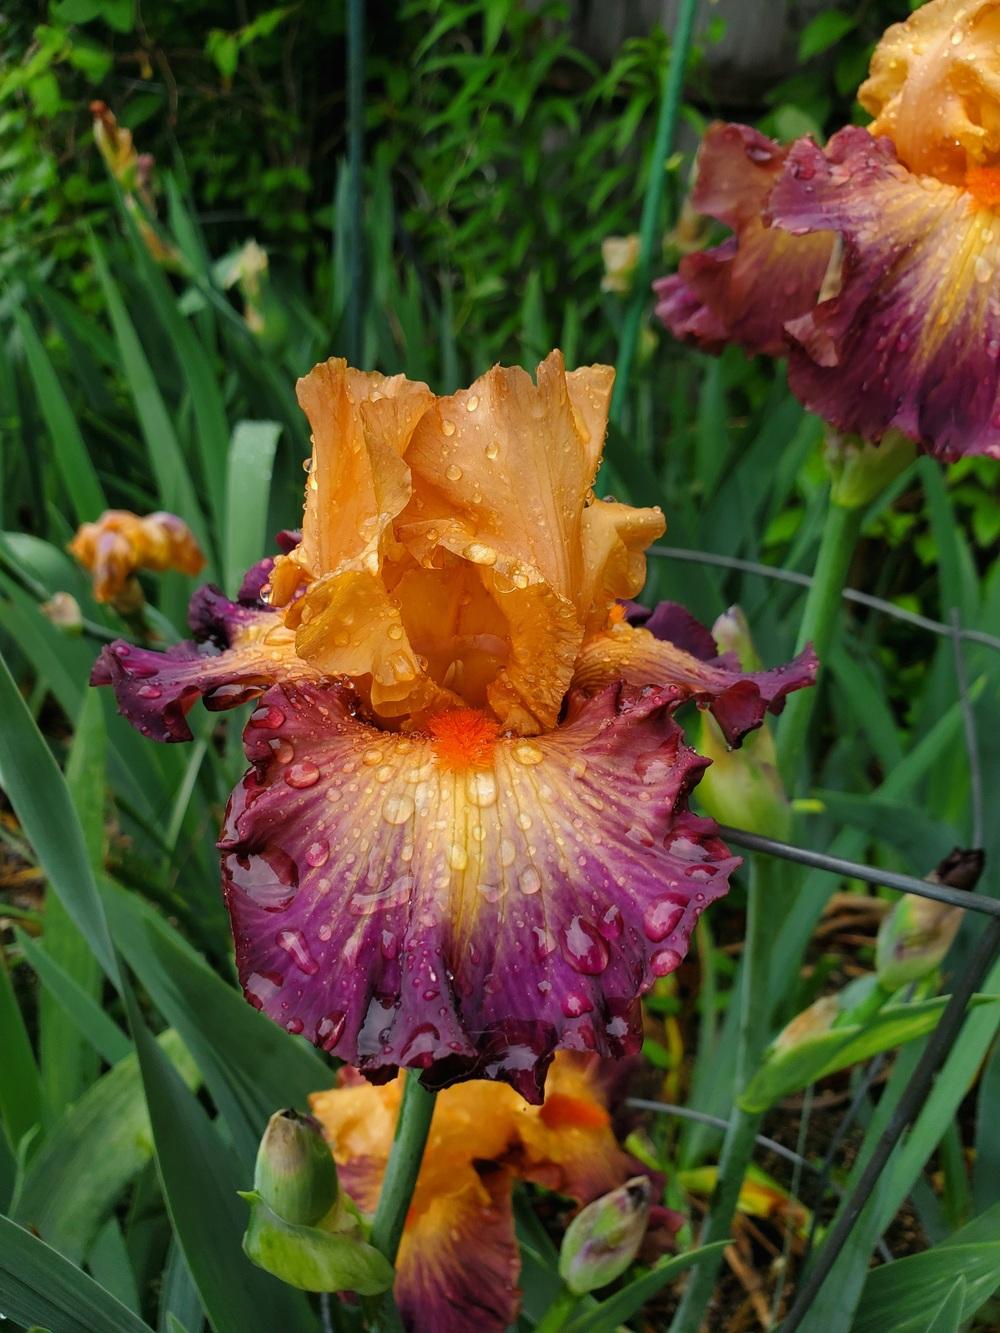 Photo of Tall Bearded Iris (Iris 'Brazilian Art') uploaded by javaMom